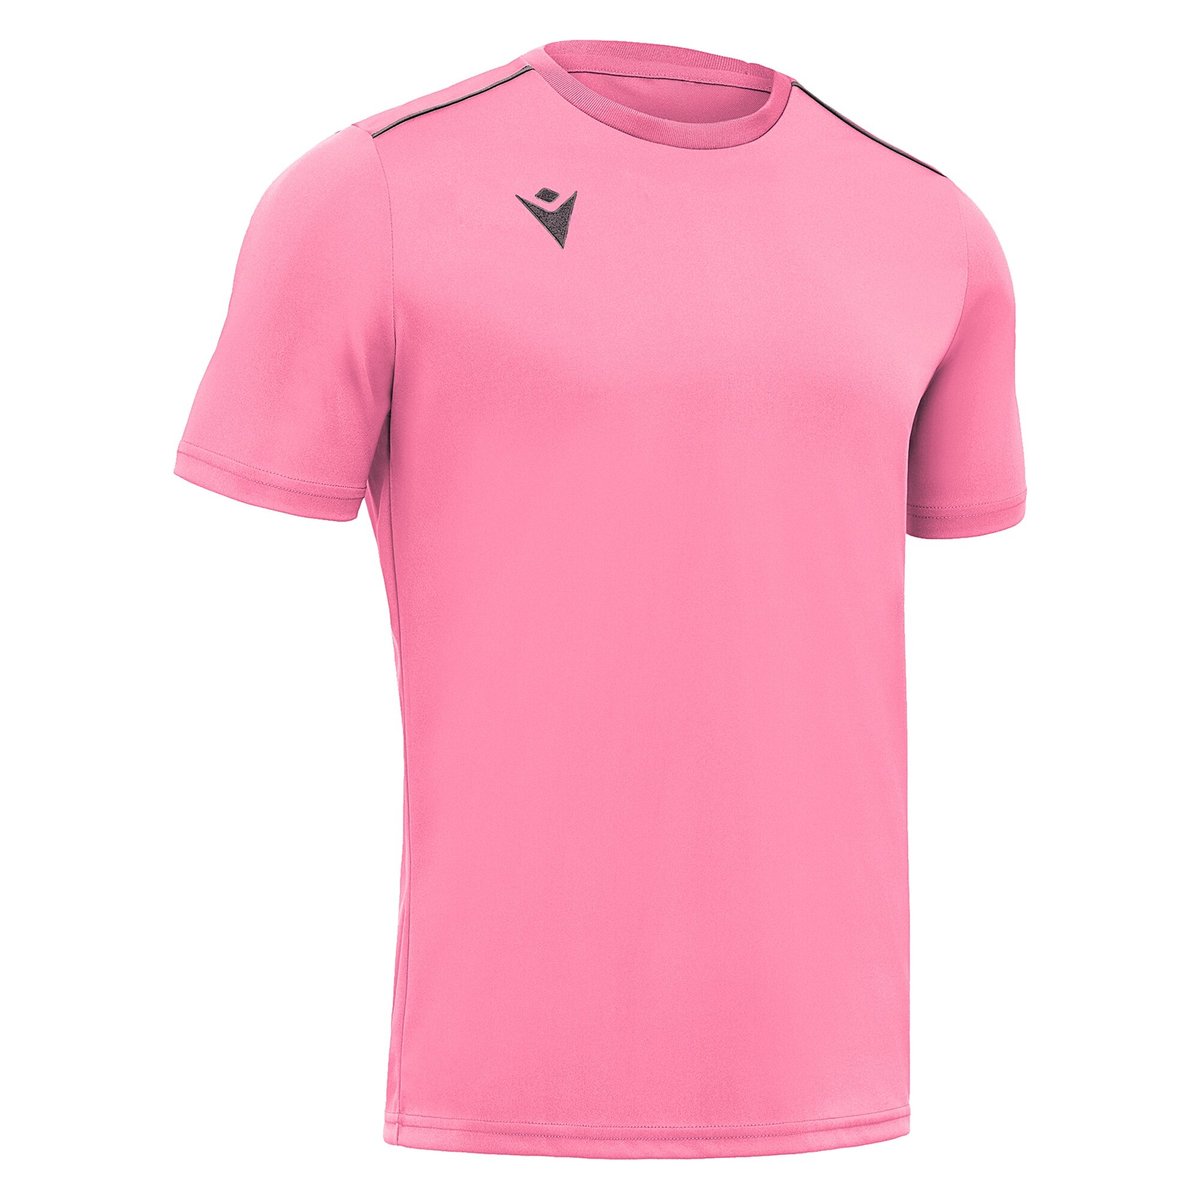 Macron Rigel Hero Shirt - Pink